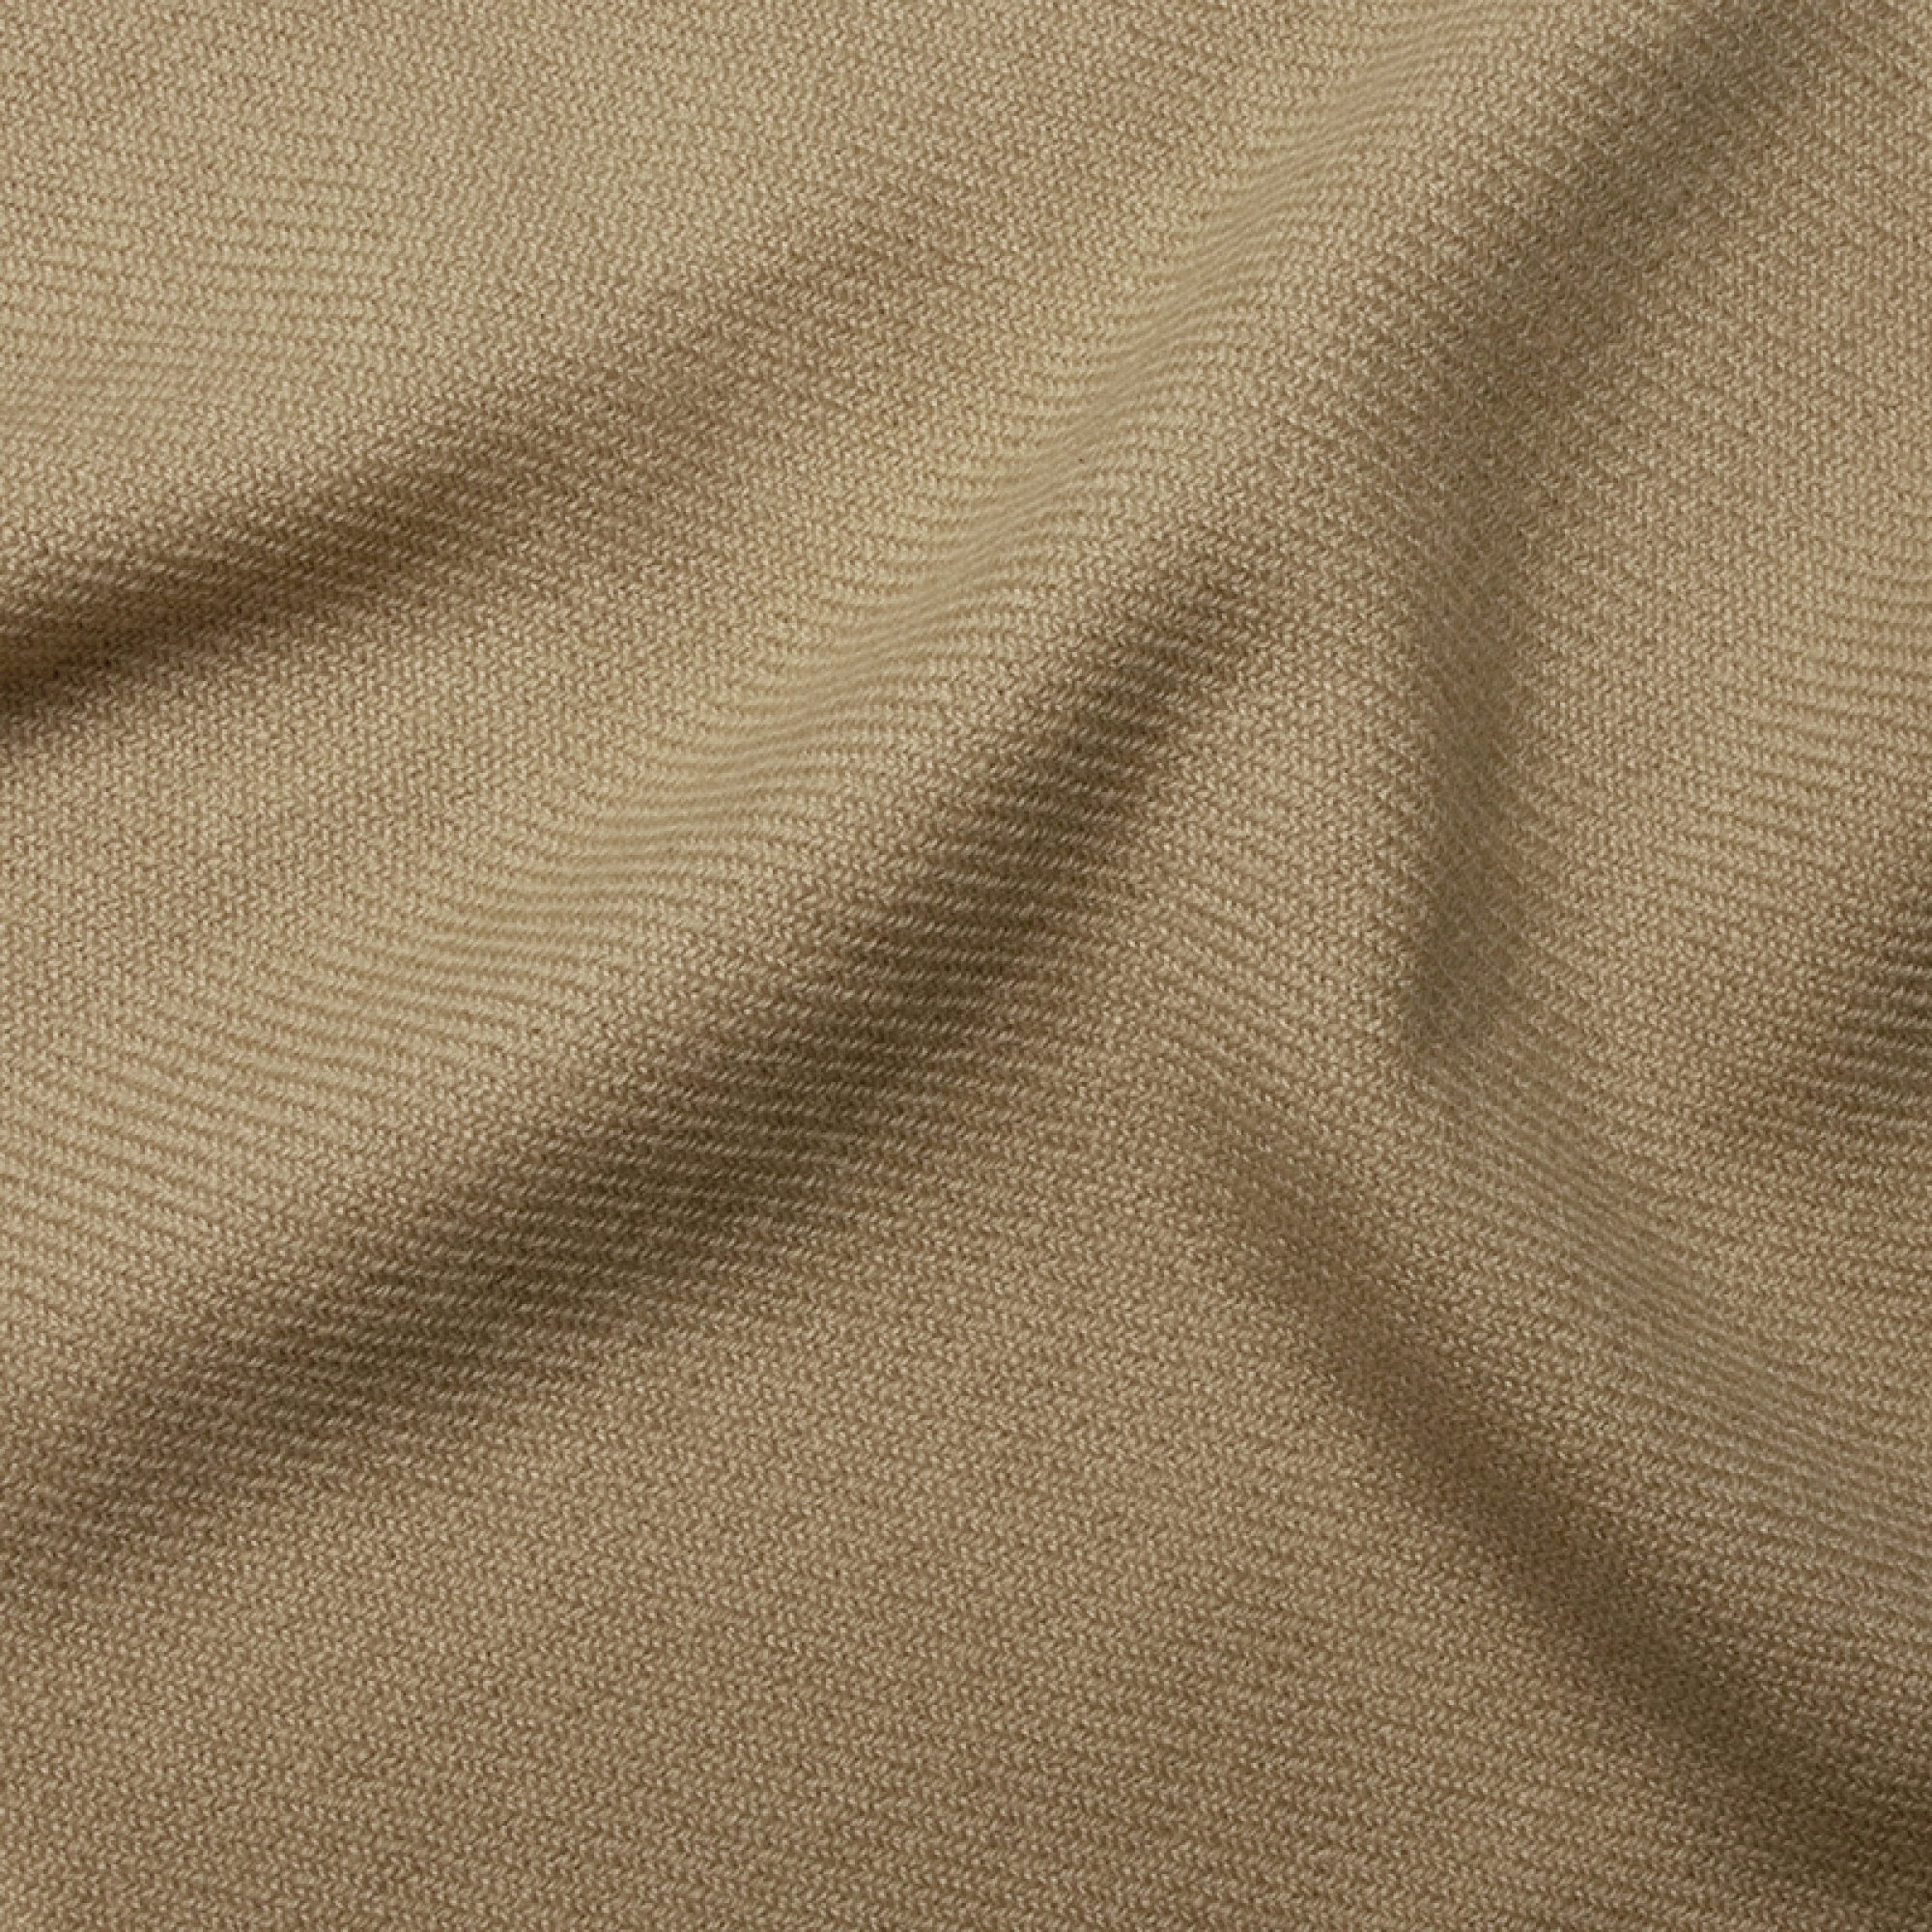 Cashmere accessories blanket toodoo plain m 180 x 220 fawn 180 x 220 cm